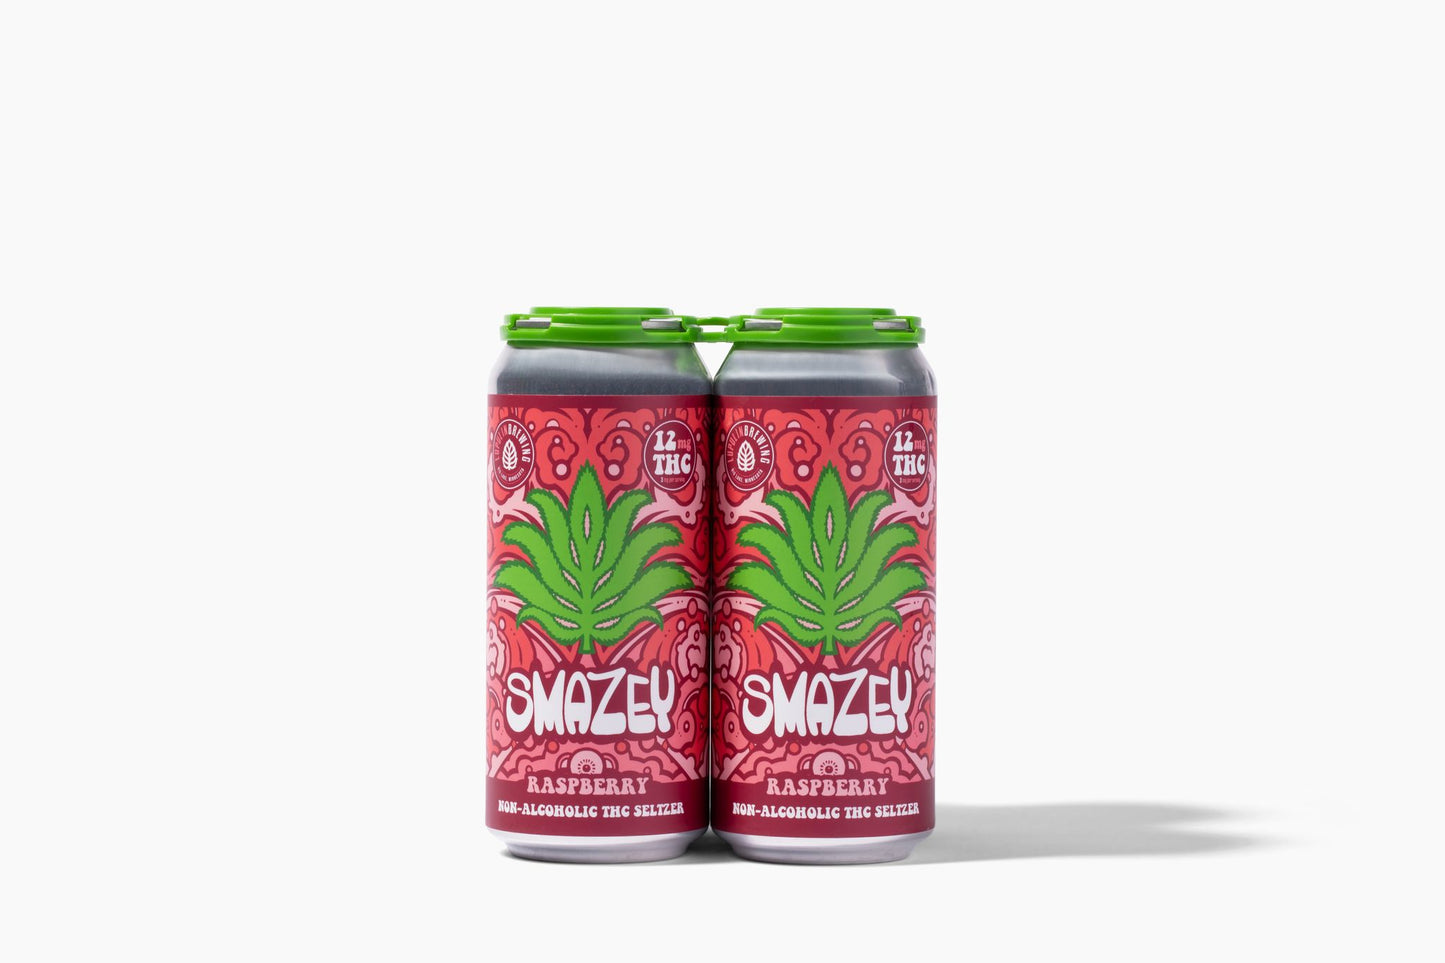 Lupulin Smazey Raspberry THC Seltzer